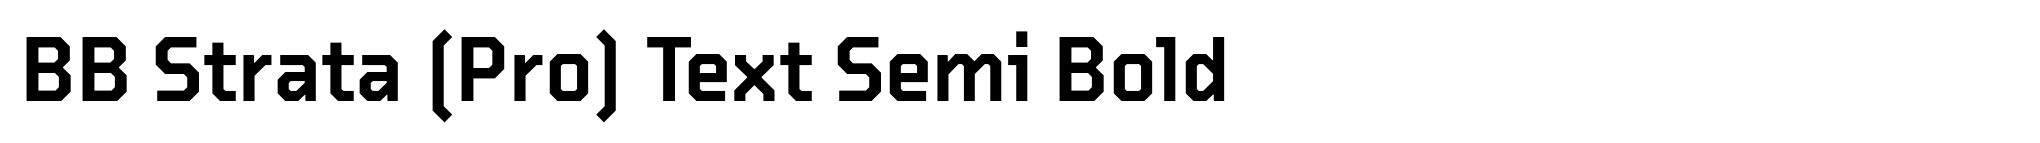 BB Strata (Pro) Text Semi Bold image